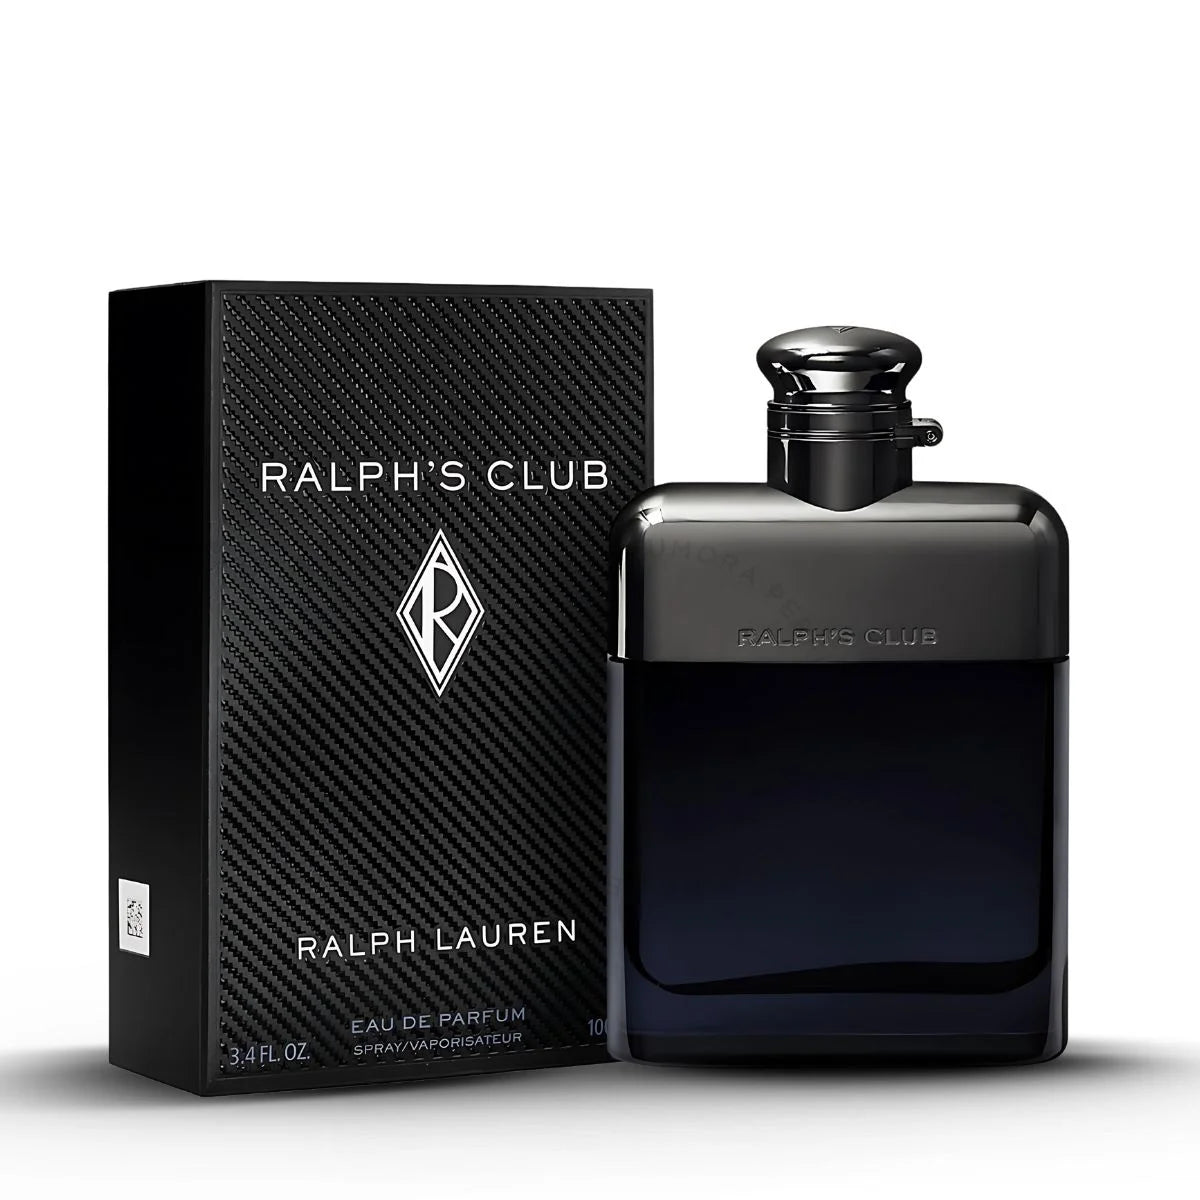 Ralph Lauren Ralph's Club EDP Spray for Men